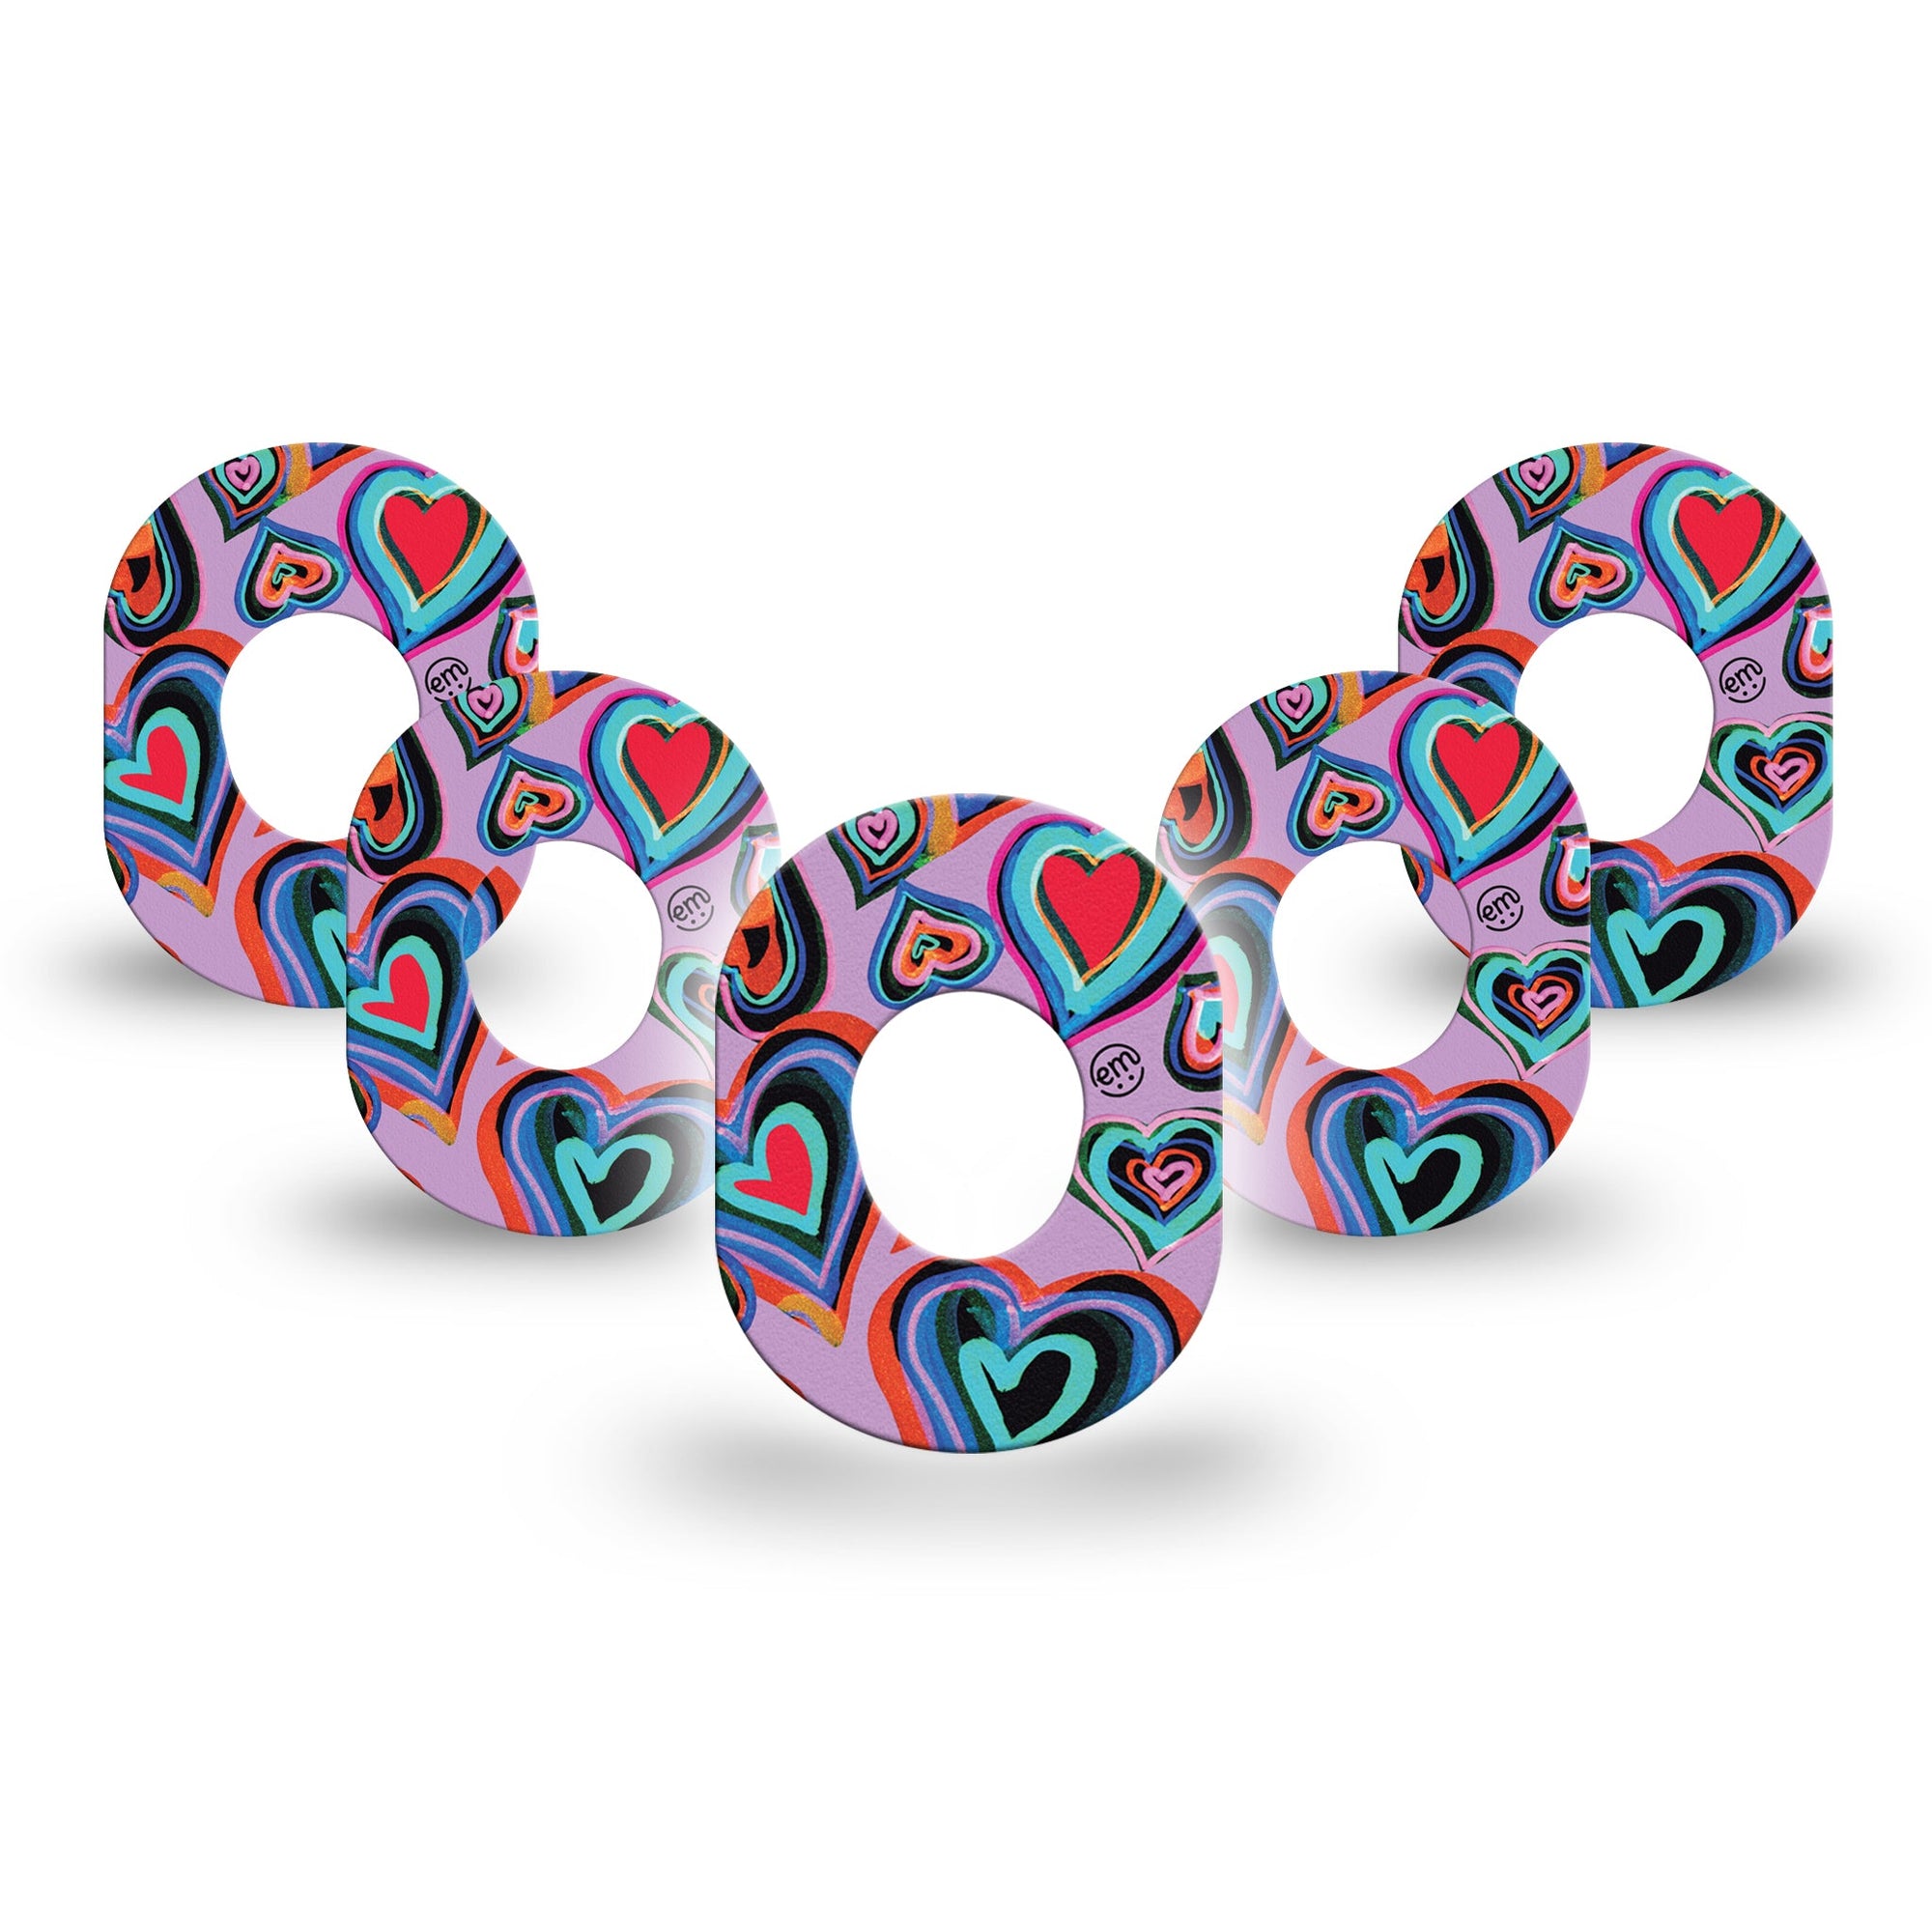 ExpressionMed Neon Hearts Dexcom G7 Mini Tape 5-Pack Multicolored Hearts, CGM Plaster Patch Design